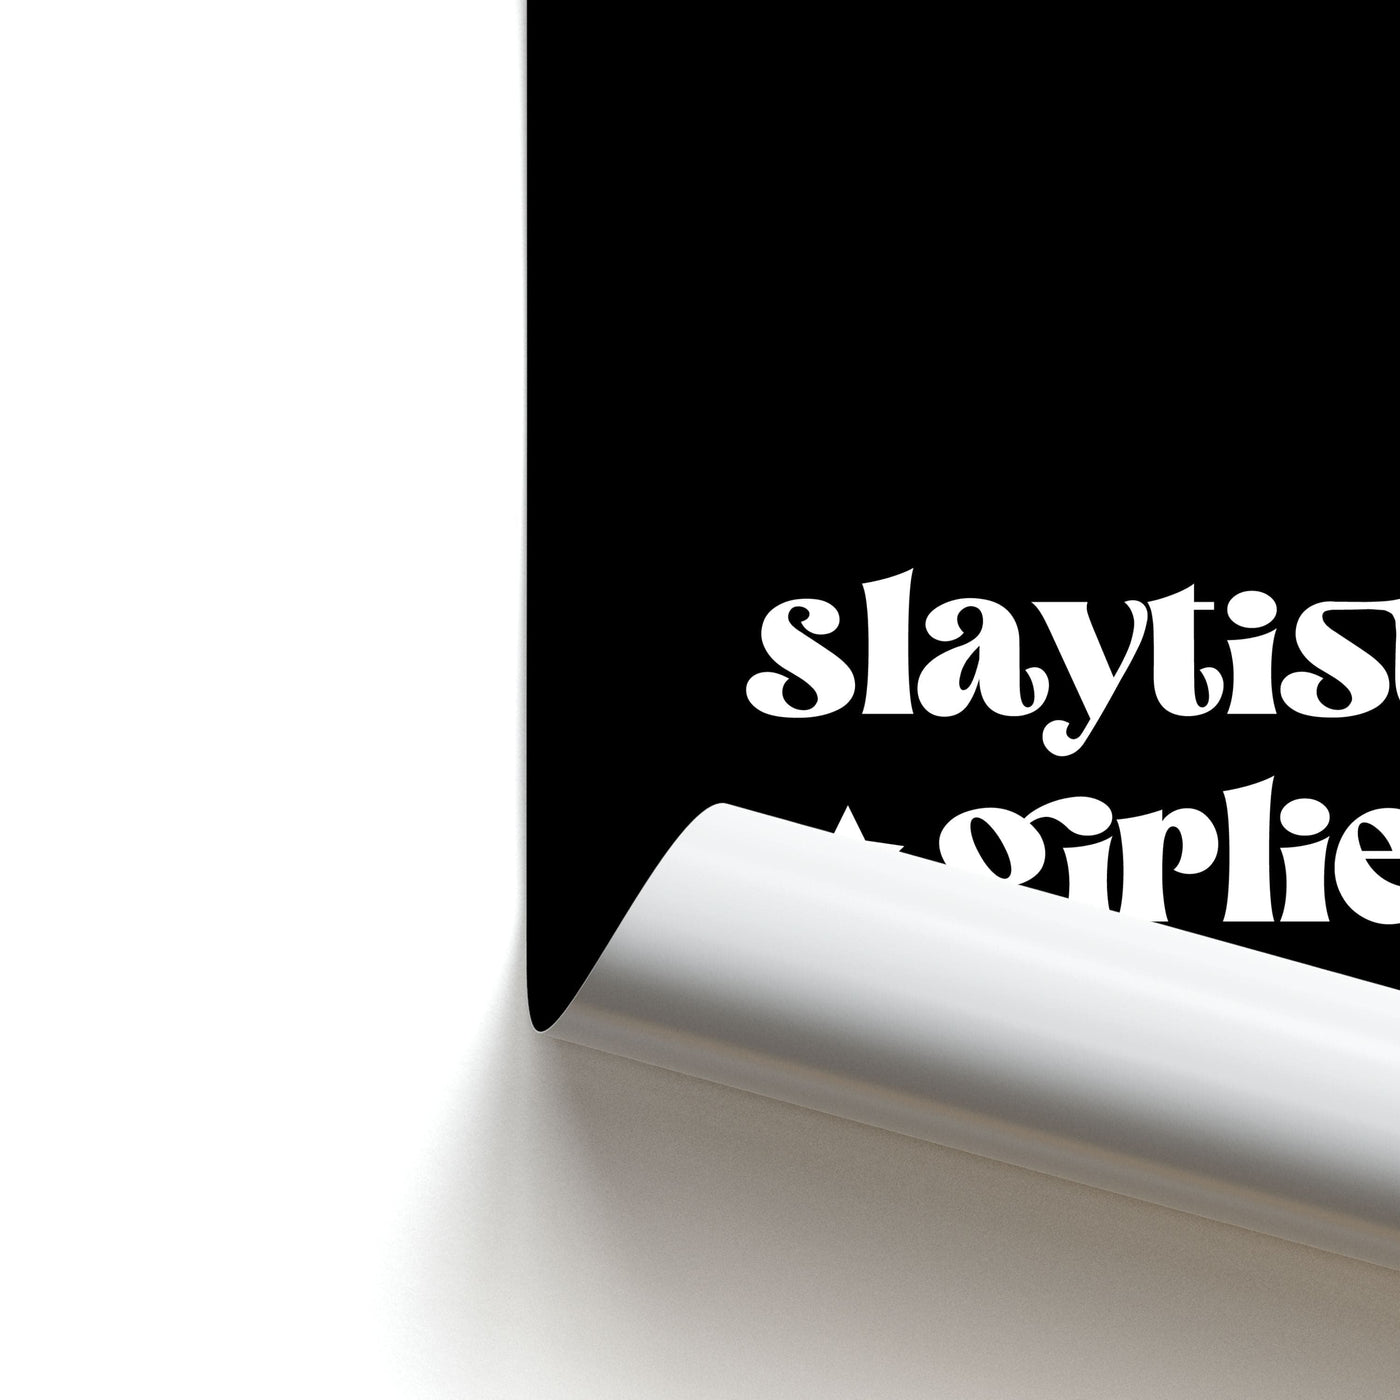 Slaytistic - TikTok Trends Poster